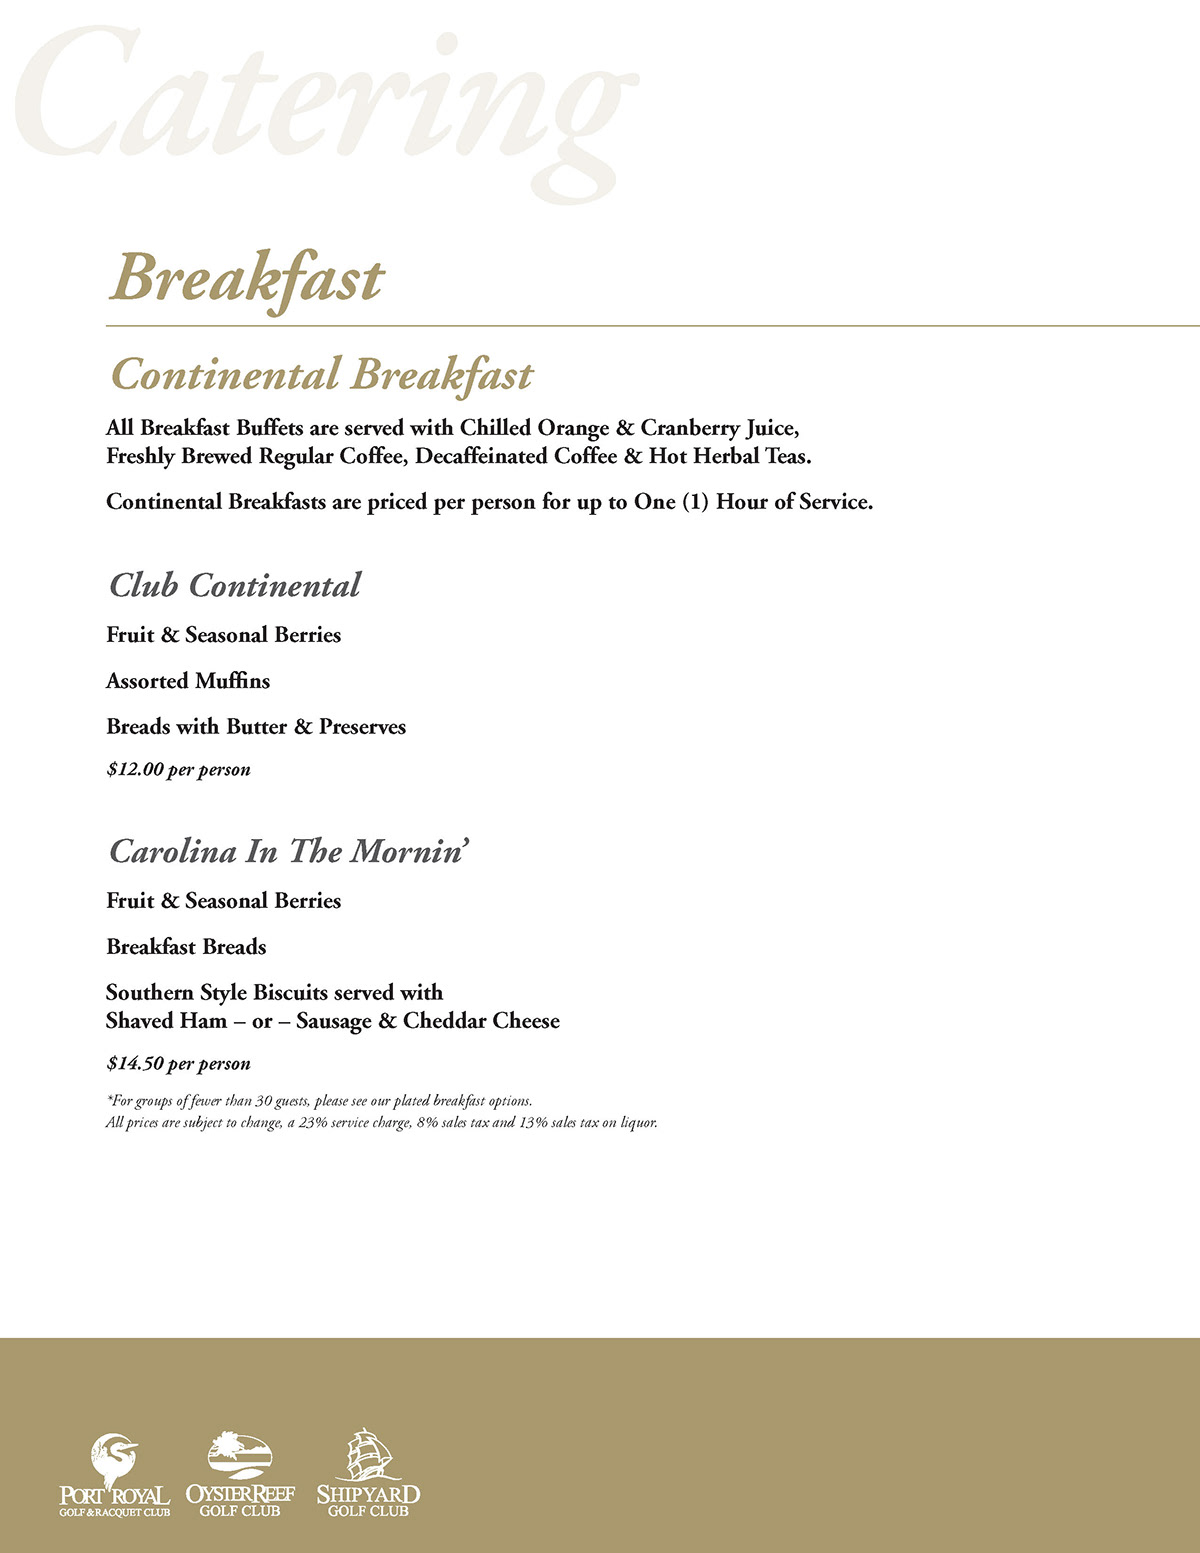 catering food and beverage golf menus design